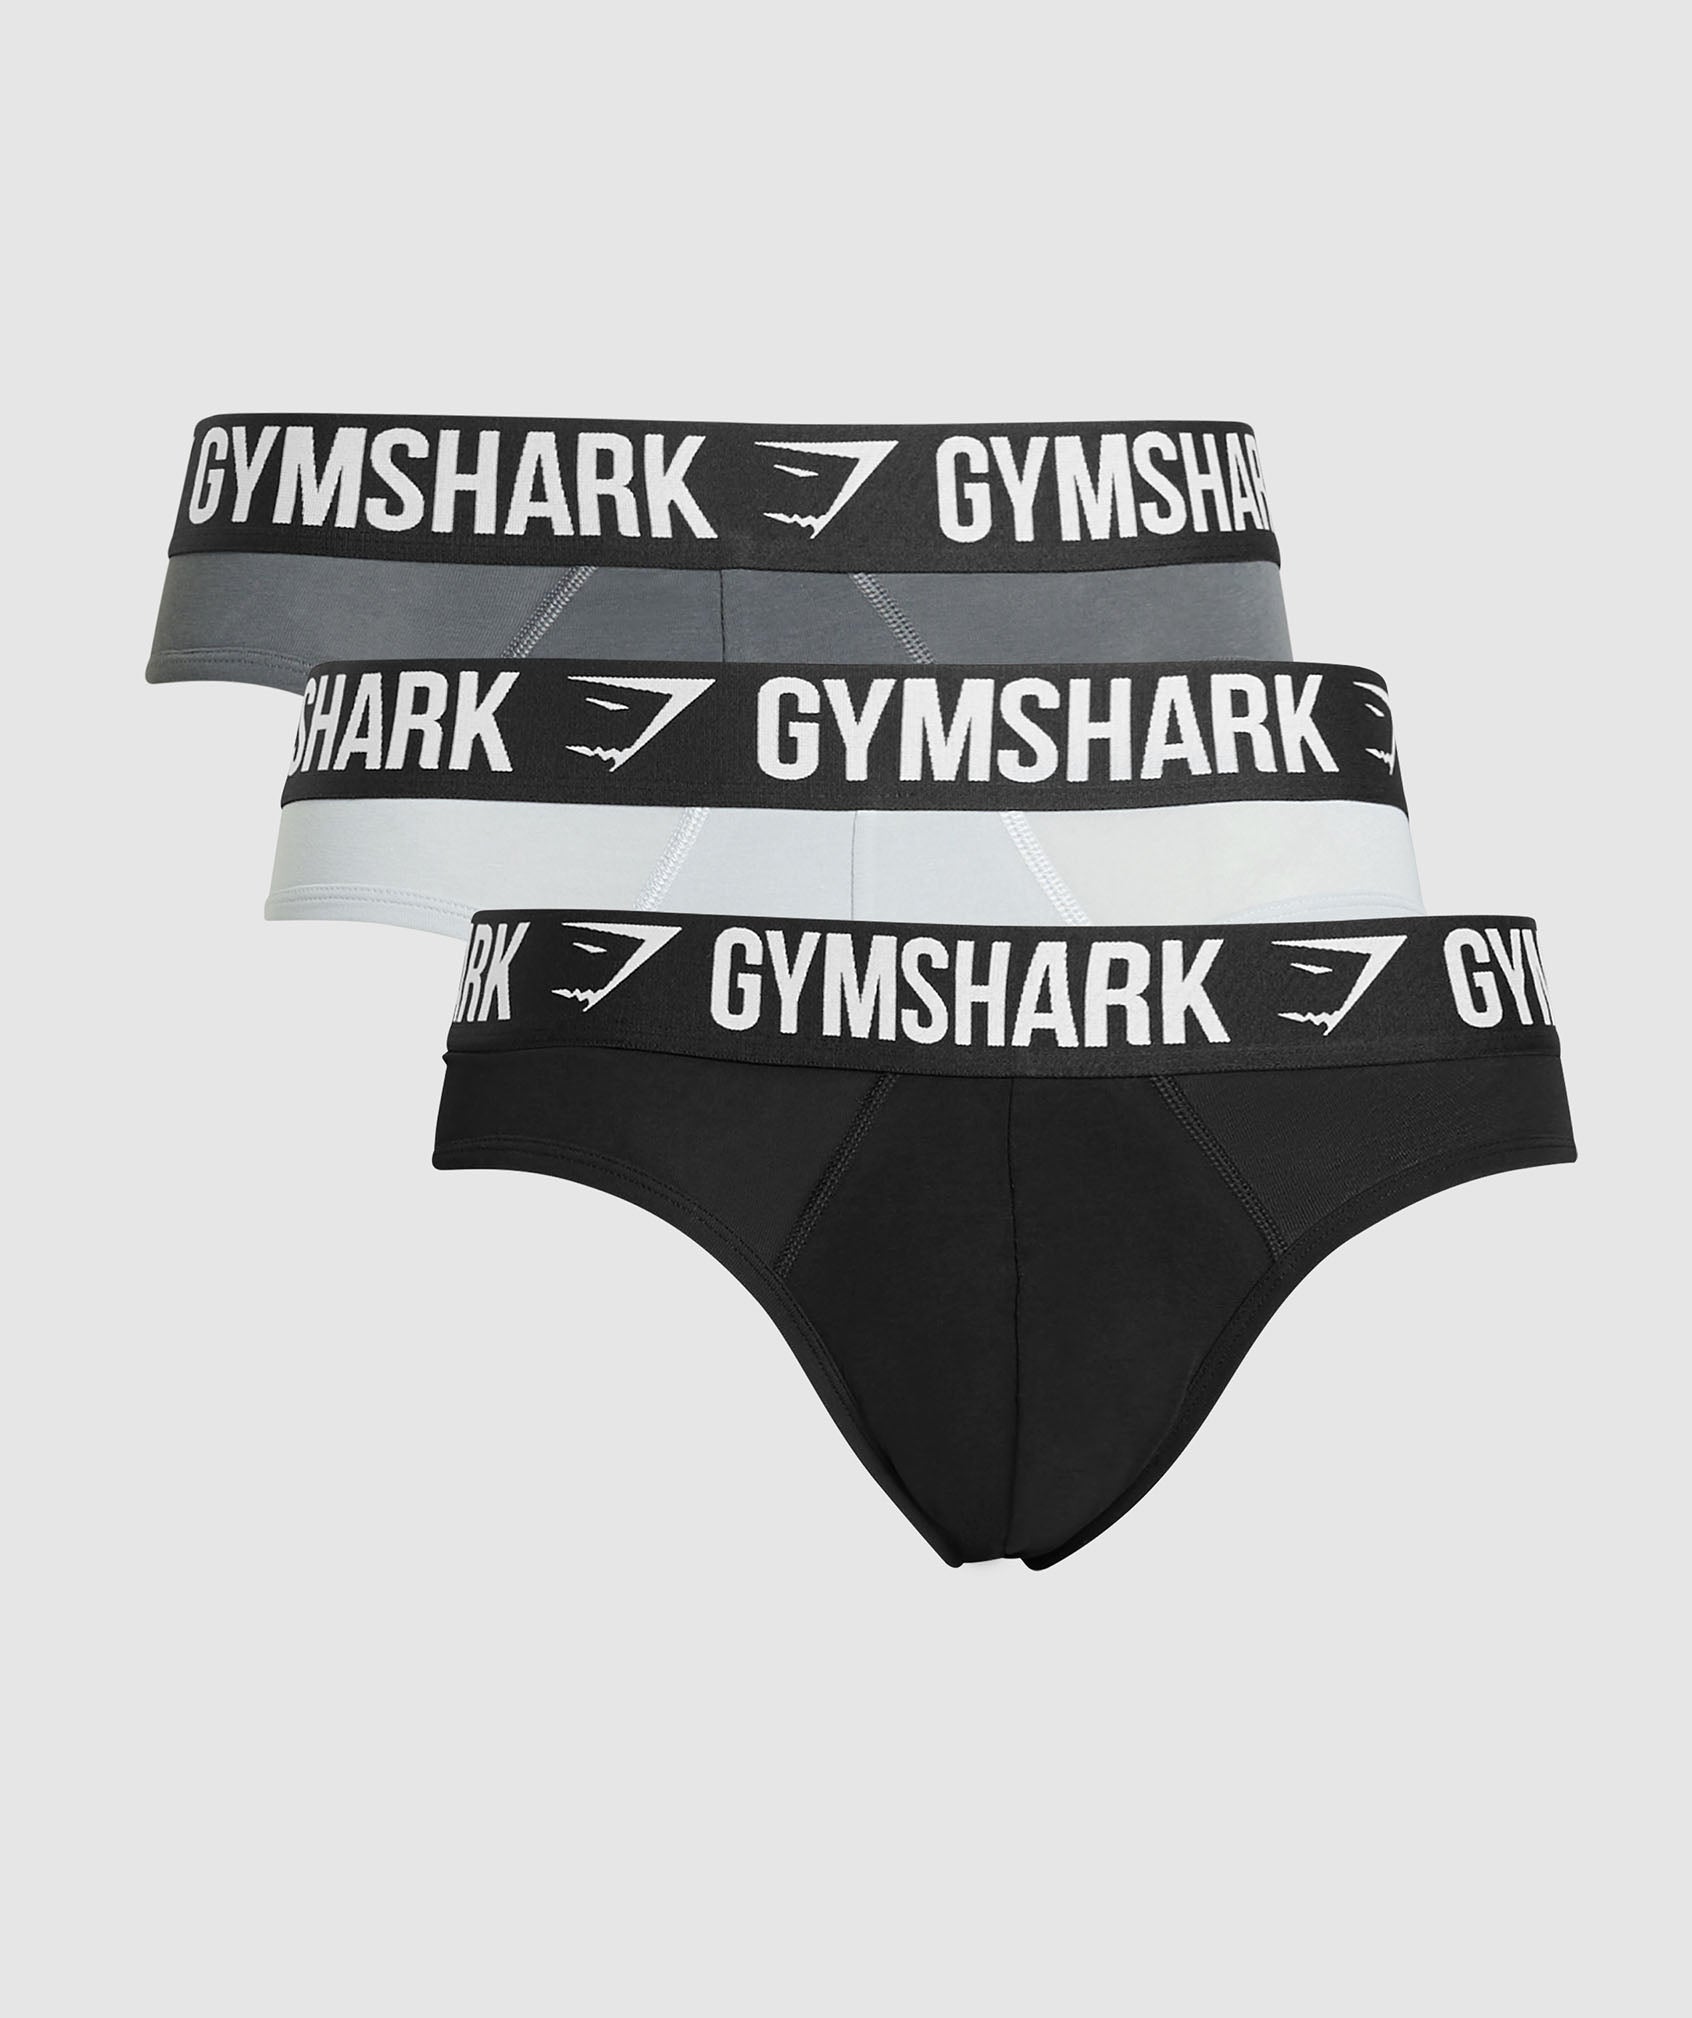 Gymshark Men's Sports Tech Boxers 3 Pack, Black / Core Green